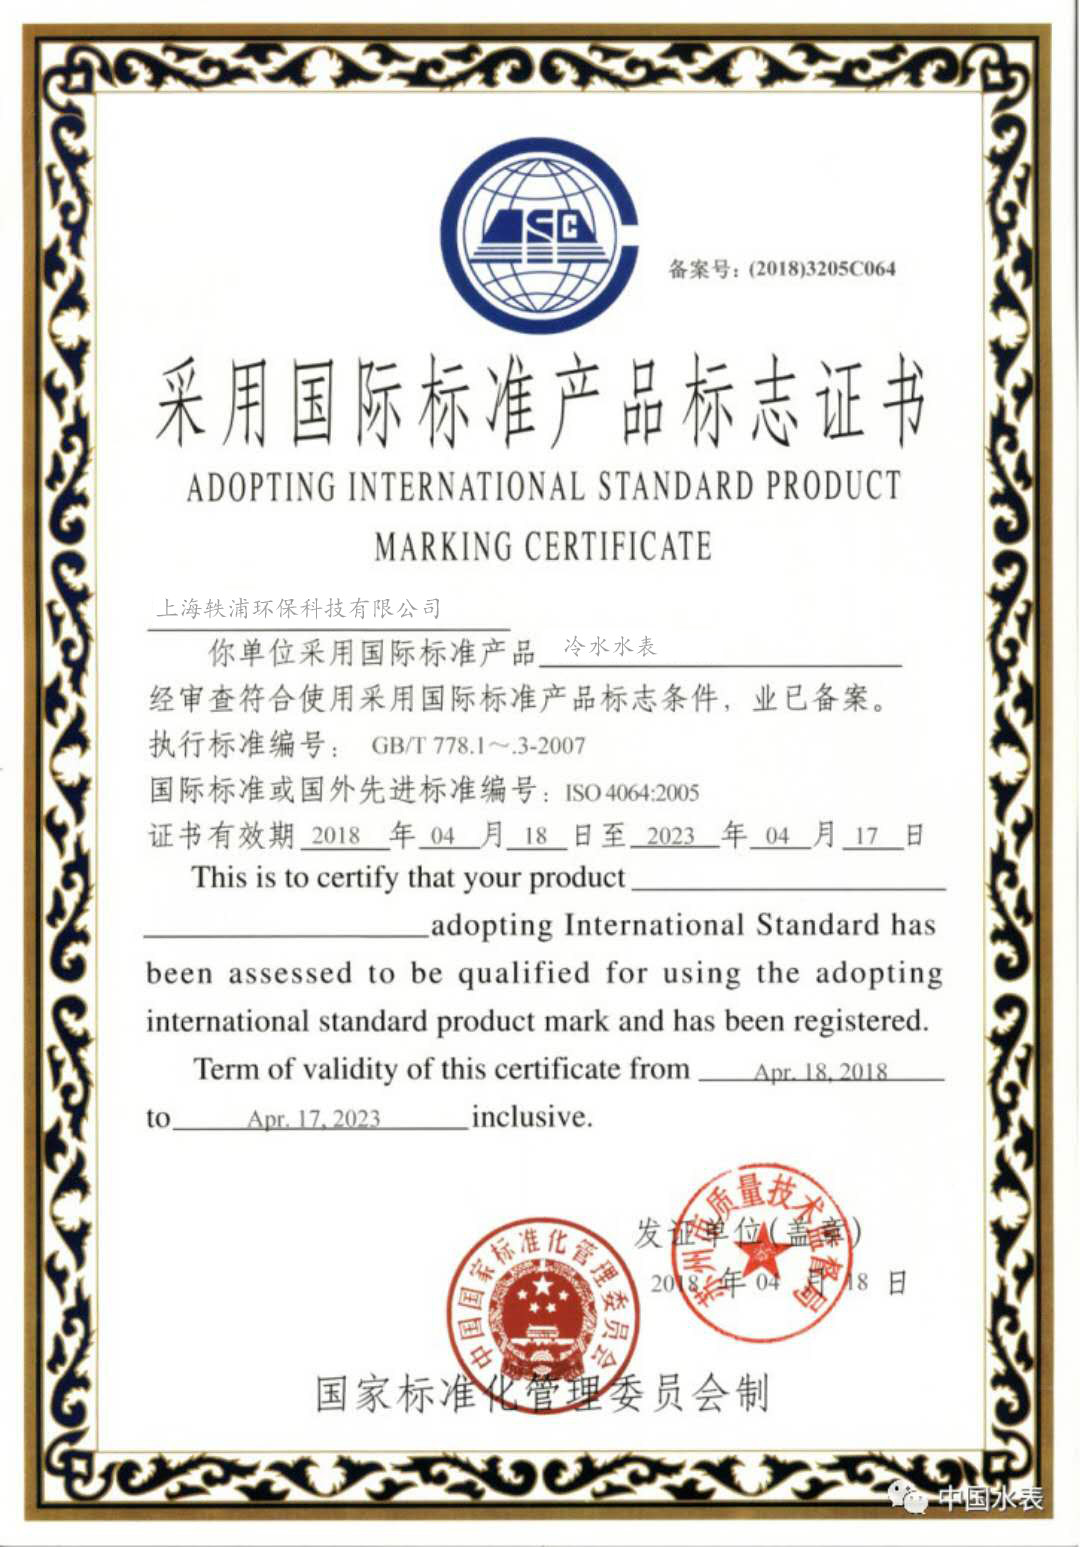 Shanghai I Fluid Technology Co., Ltd. Certifications